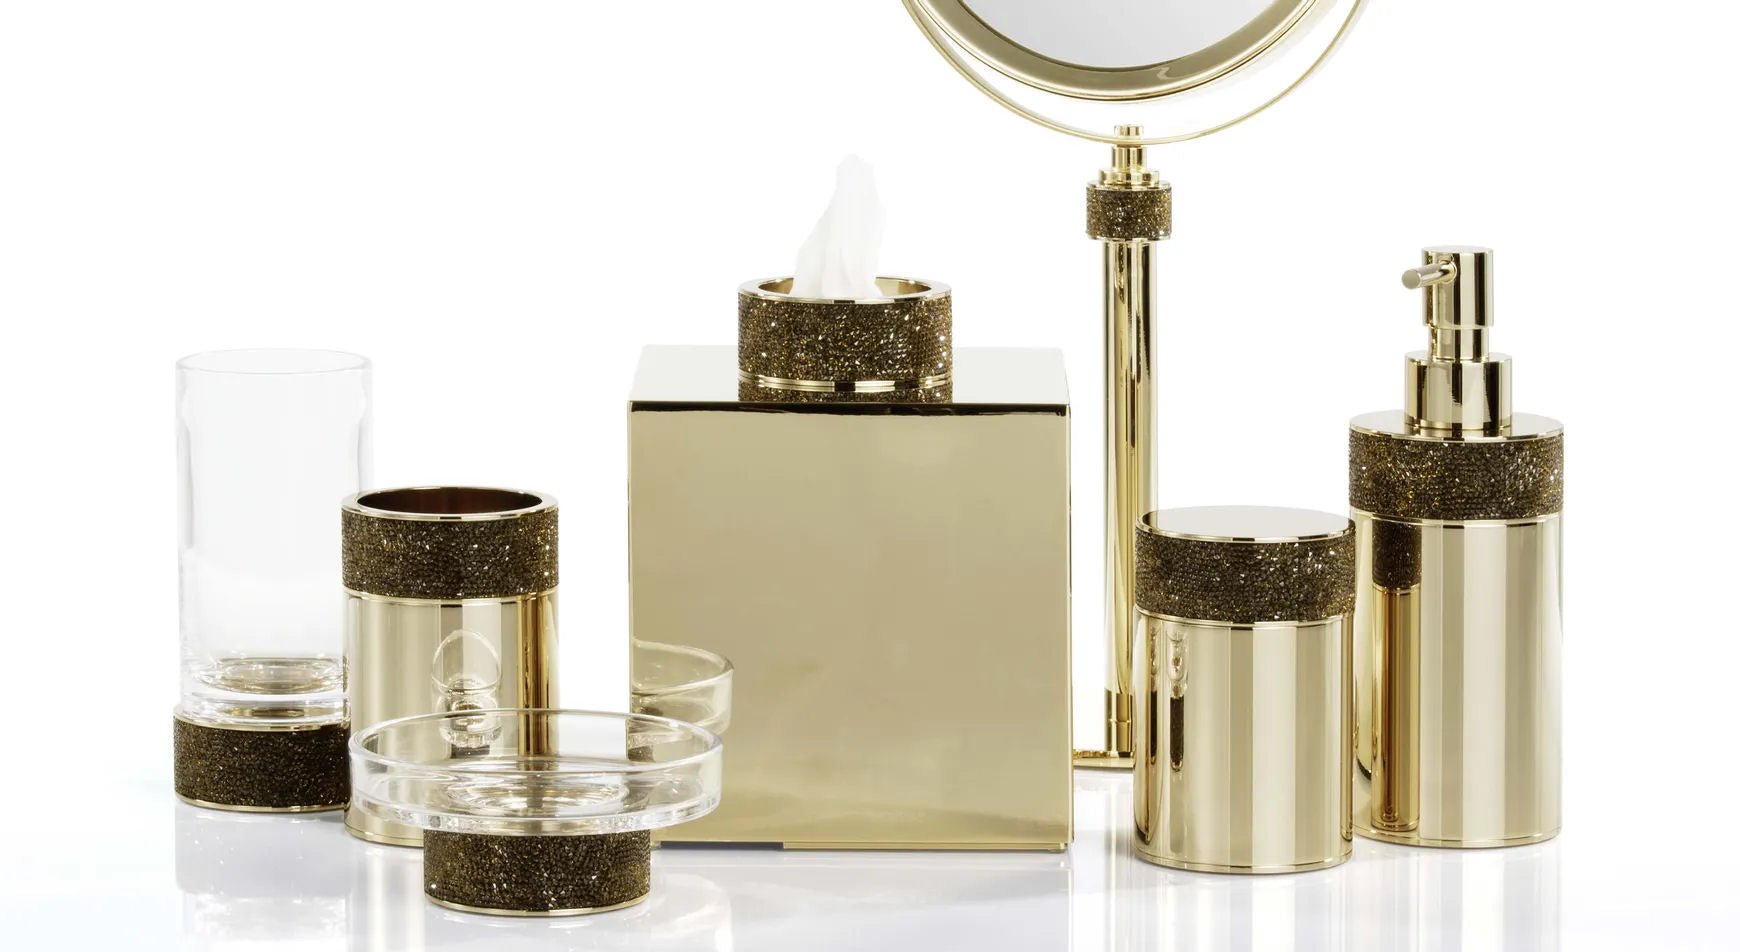 Luxury Gold Soap Dish with Swarowski® Crystals - |VESIMI Design|